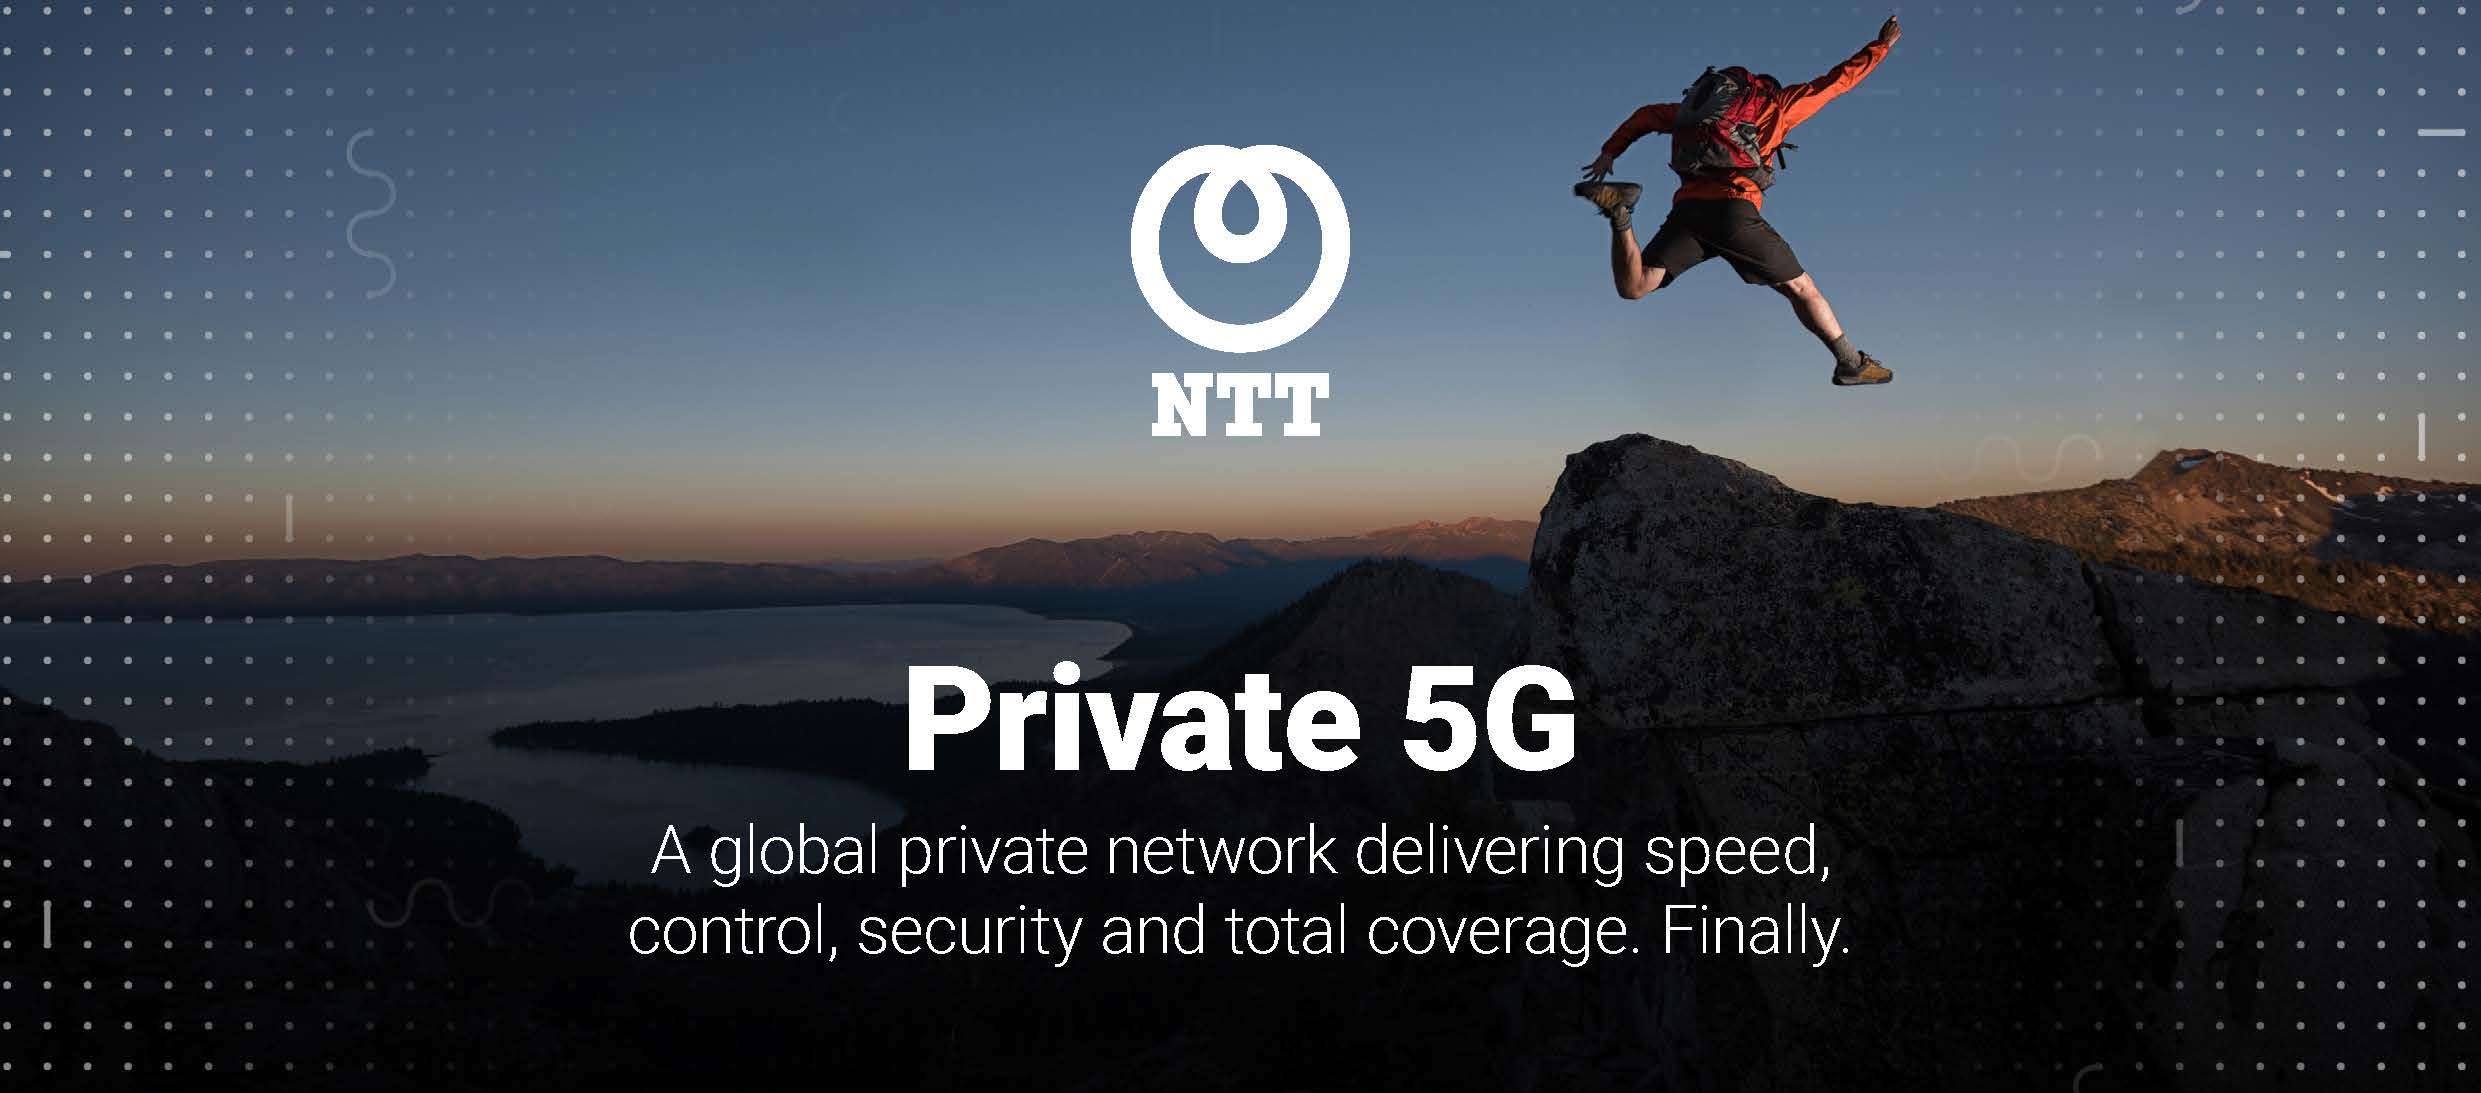 NTT เปิดตัวแพลตฟอร์มเครือข่าย Private 5G ให้บริการเป็นครั้งแรกทั่วโลก